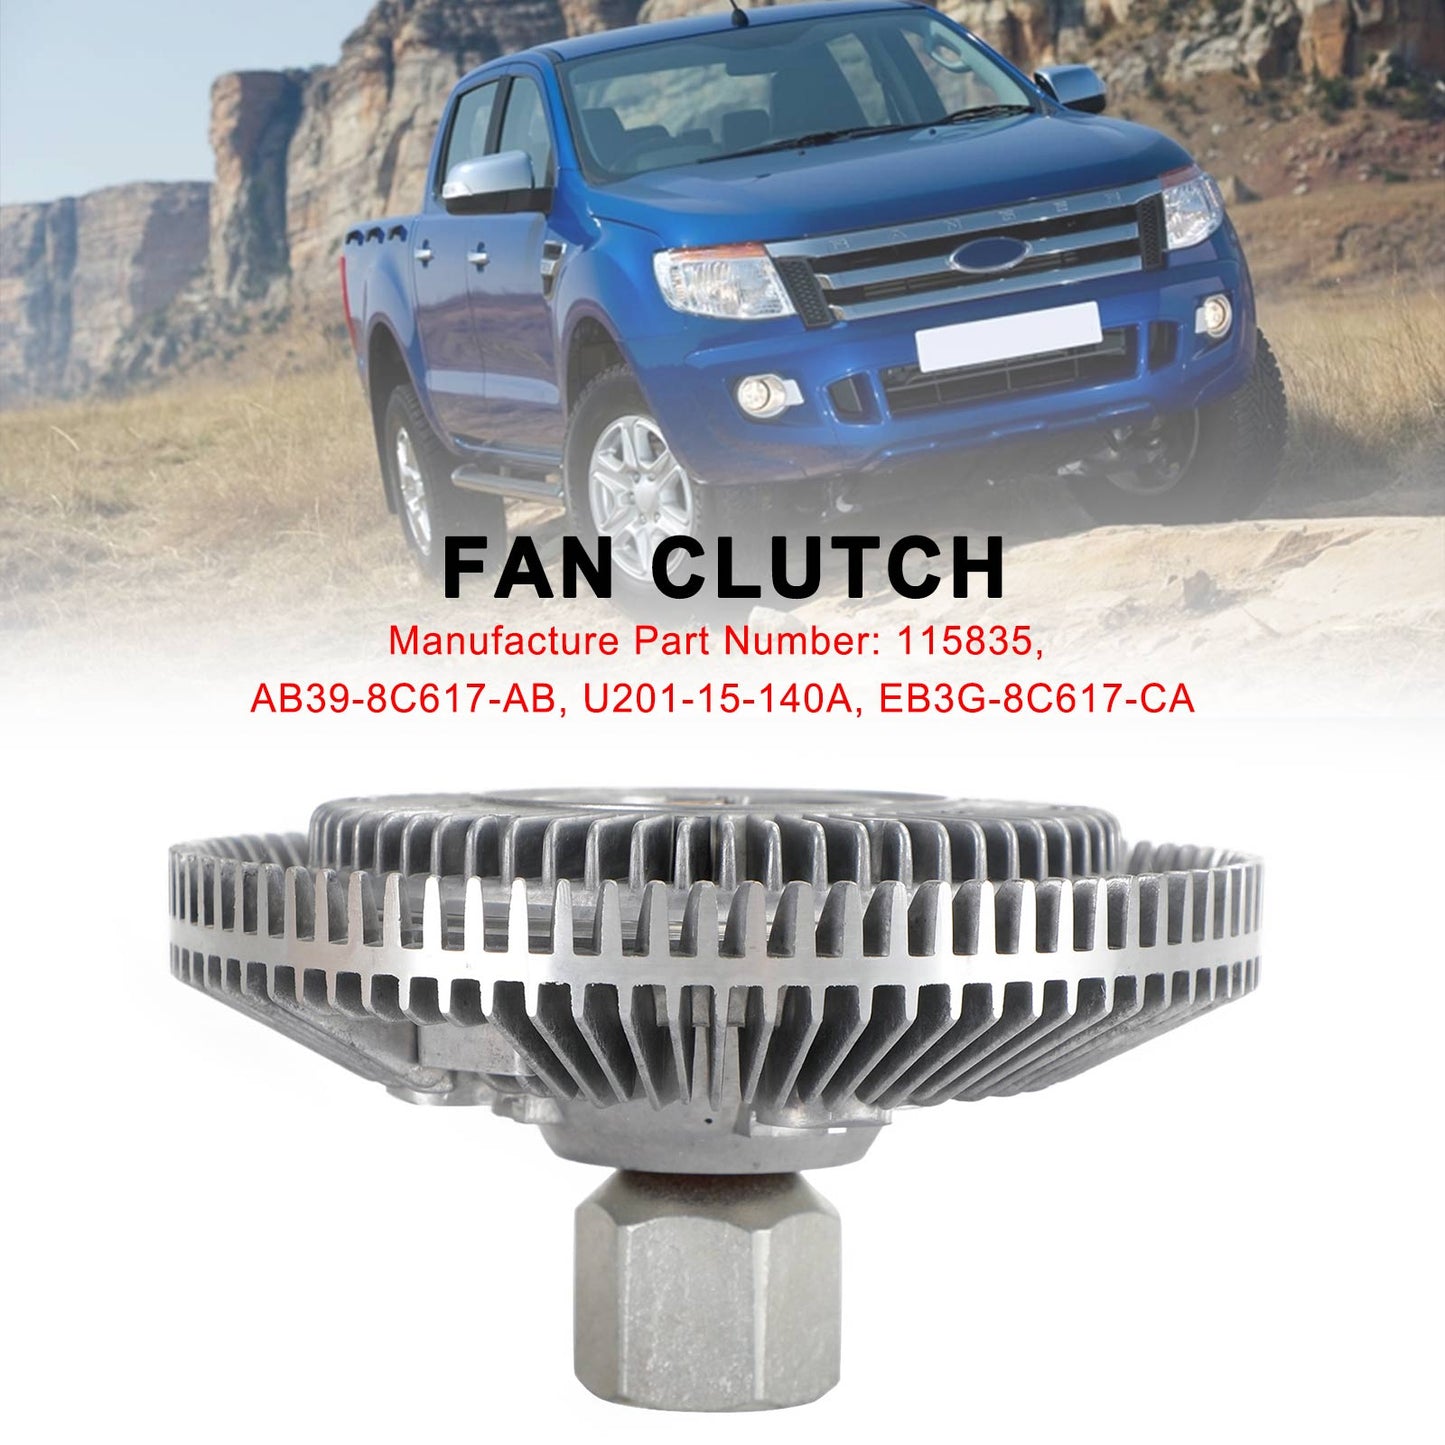 Fan Clutch 115835 fit Ford Ranger fit Mazda BT50 2.2L 3.2L Turbo Diesel Replace